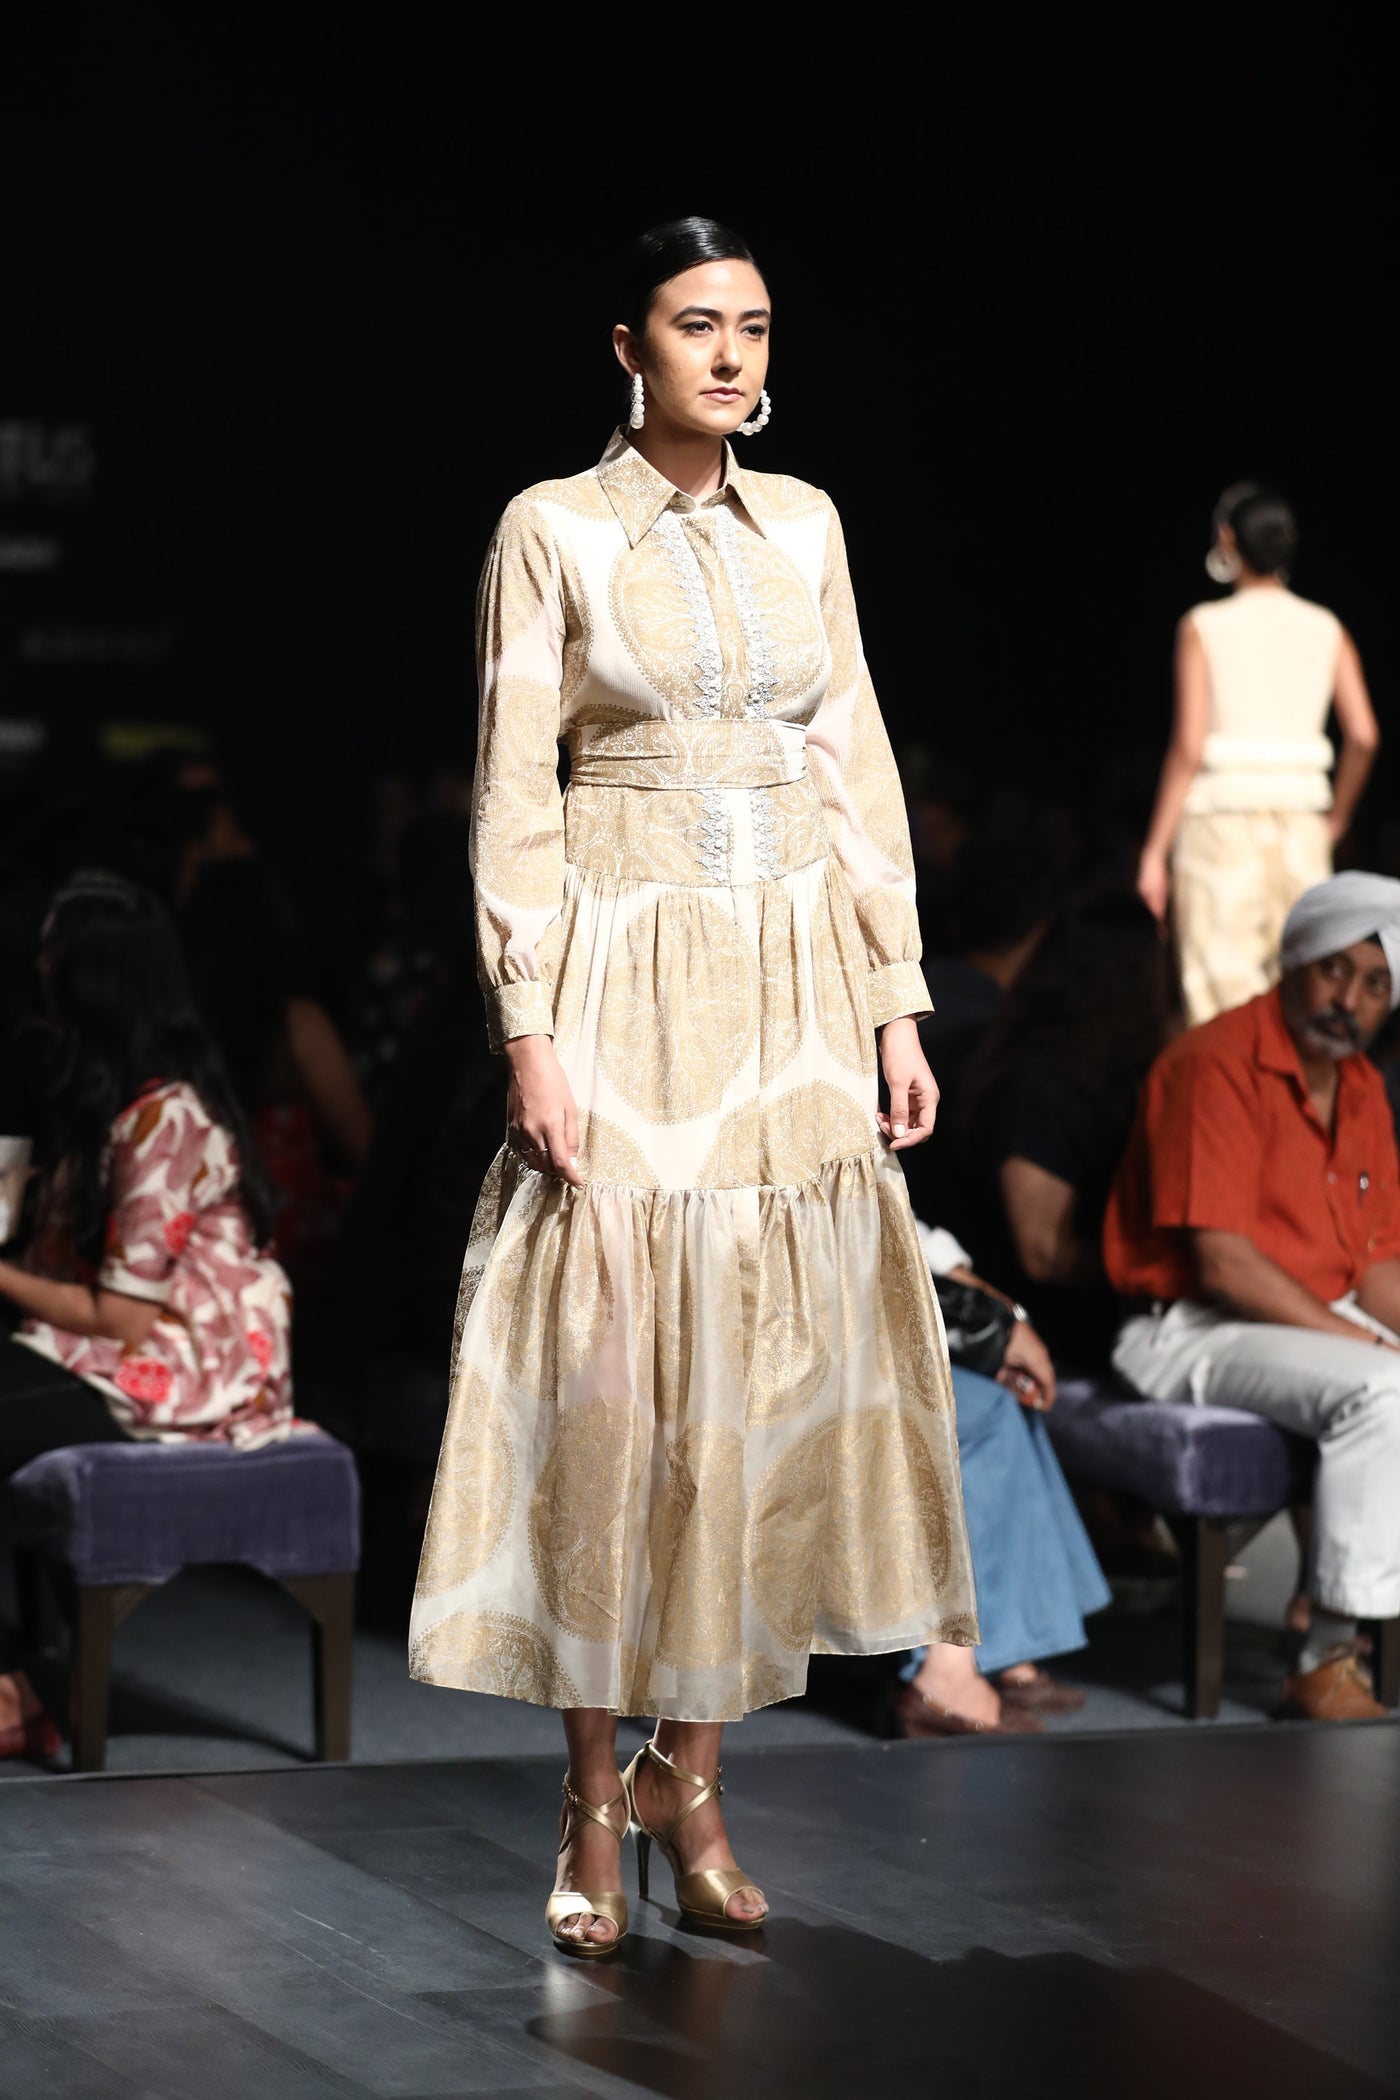 A Printed Collar Dress With An Embellished Yoke & Printed Belt - BHUMIKA SHARMA